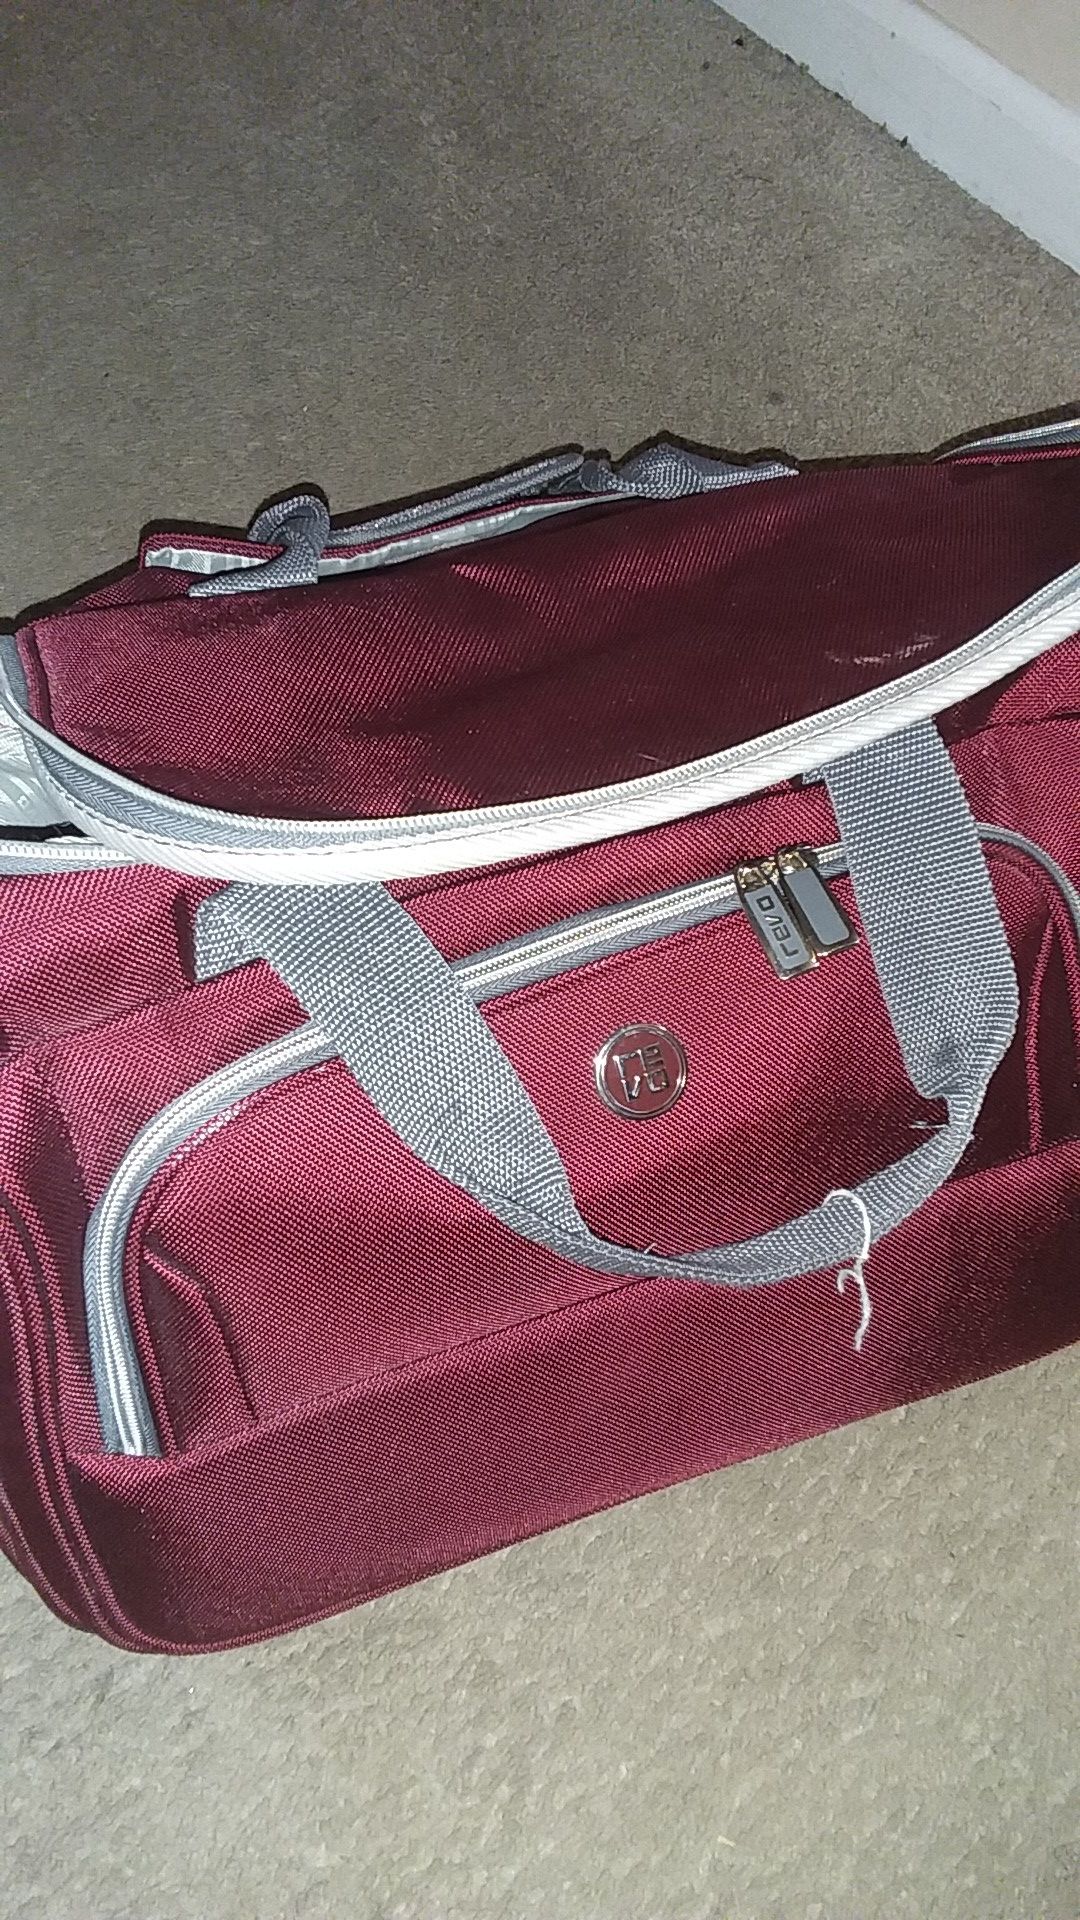 REVO Luggage Bag(Burgundy)- MINT CONDITION